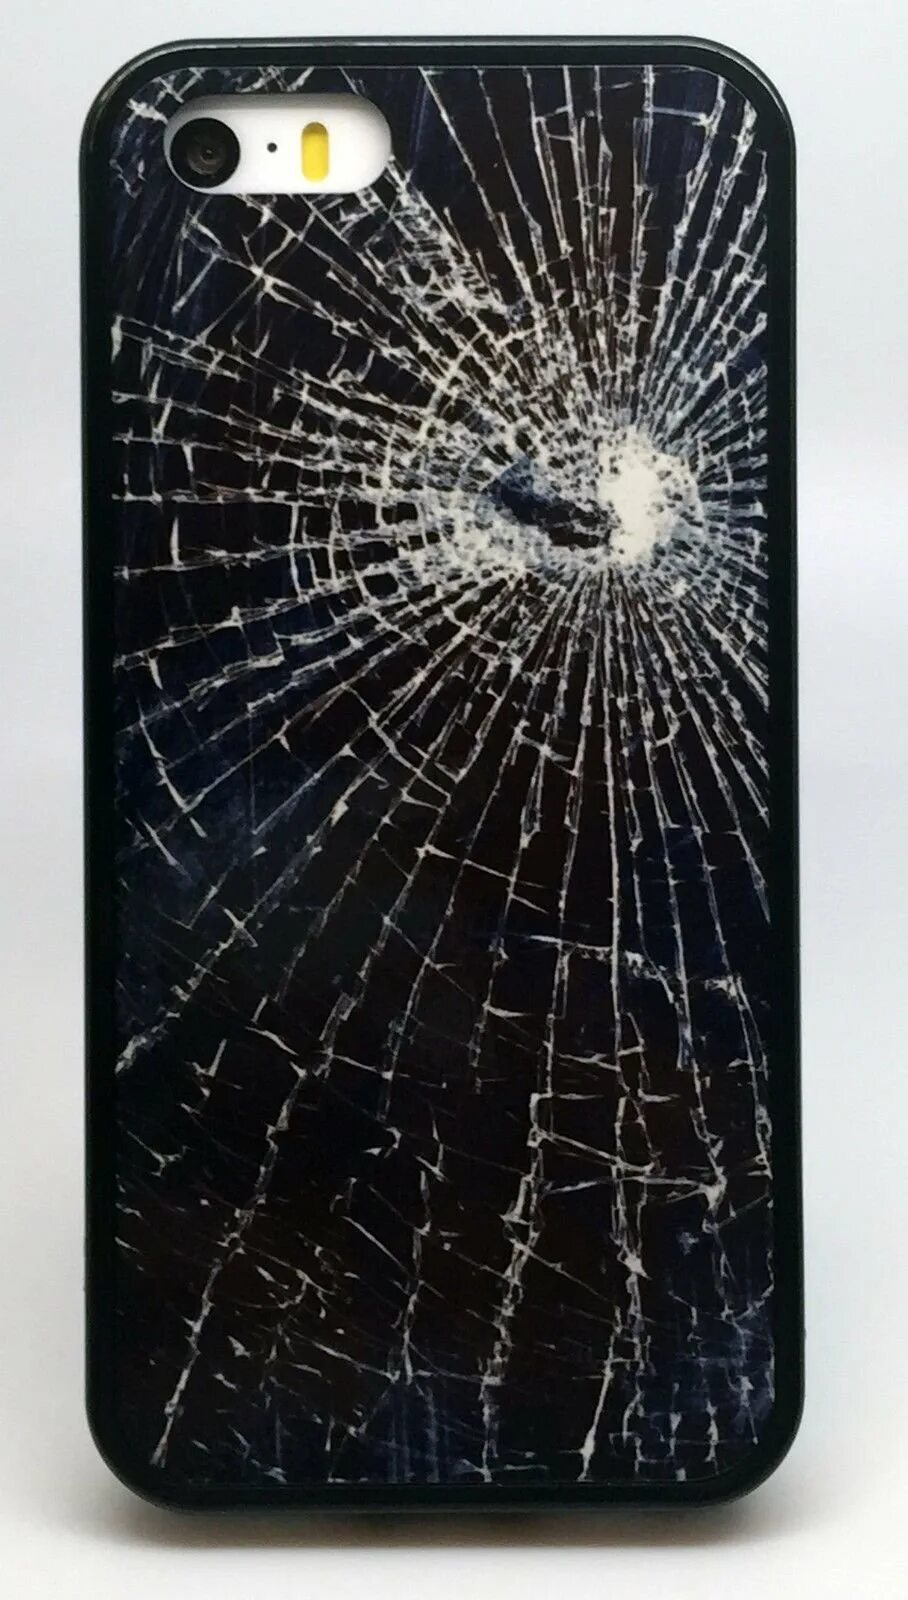 Кабуто разбит экран айфона. Разбитый айфон. Разбился экран смартфона. Сломанный экран.